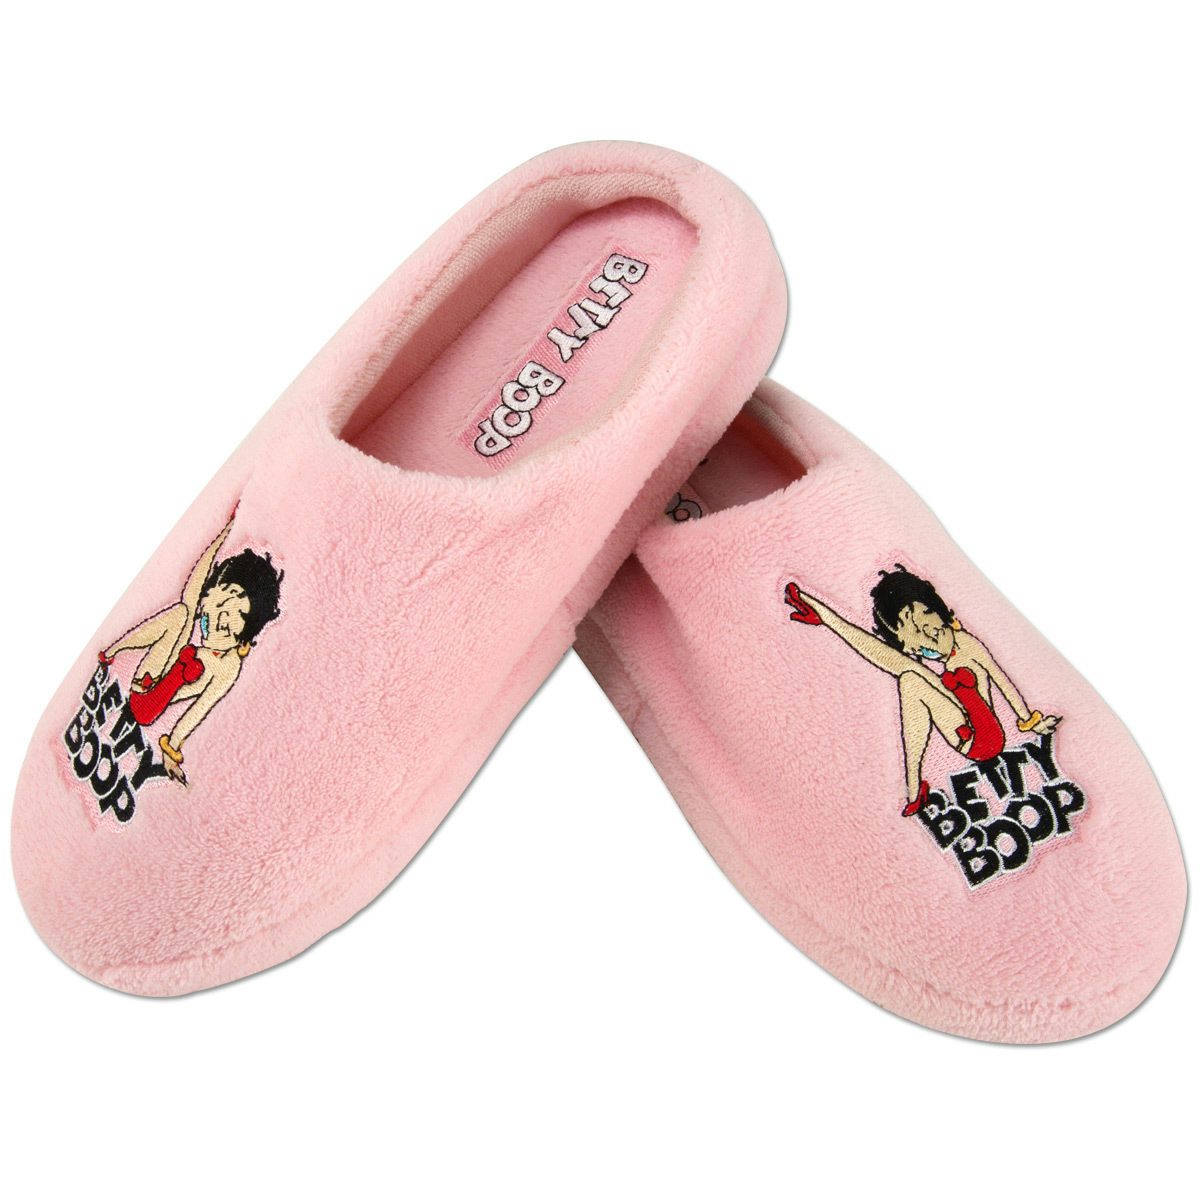 betty boop slippers